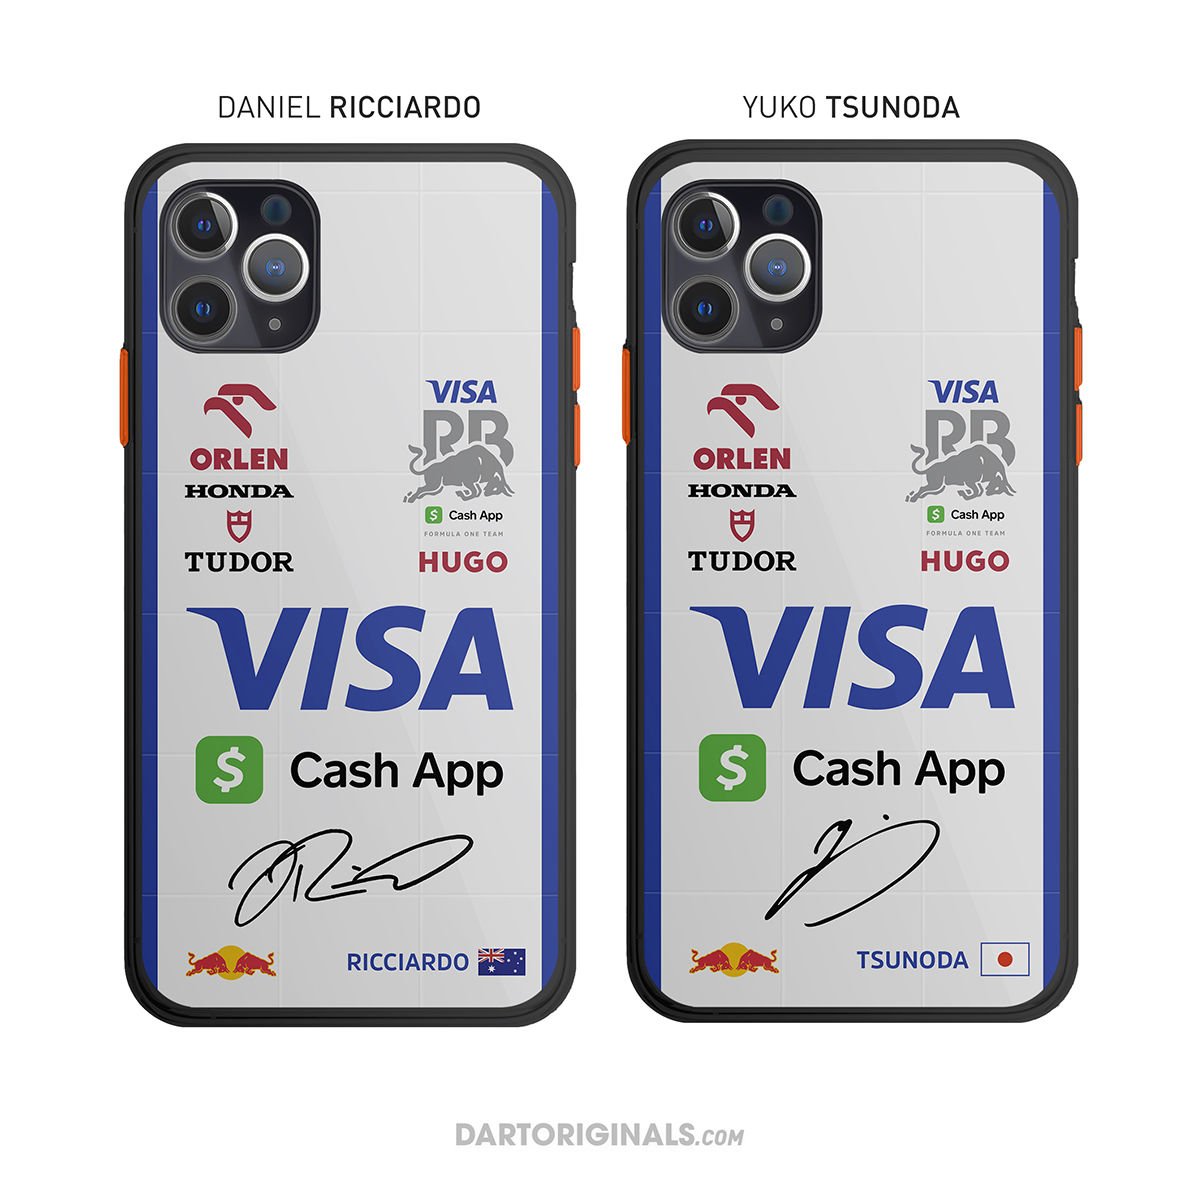 Visa Cash App RB - VCARB 01 Edition